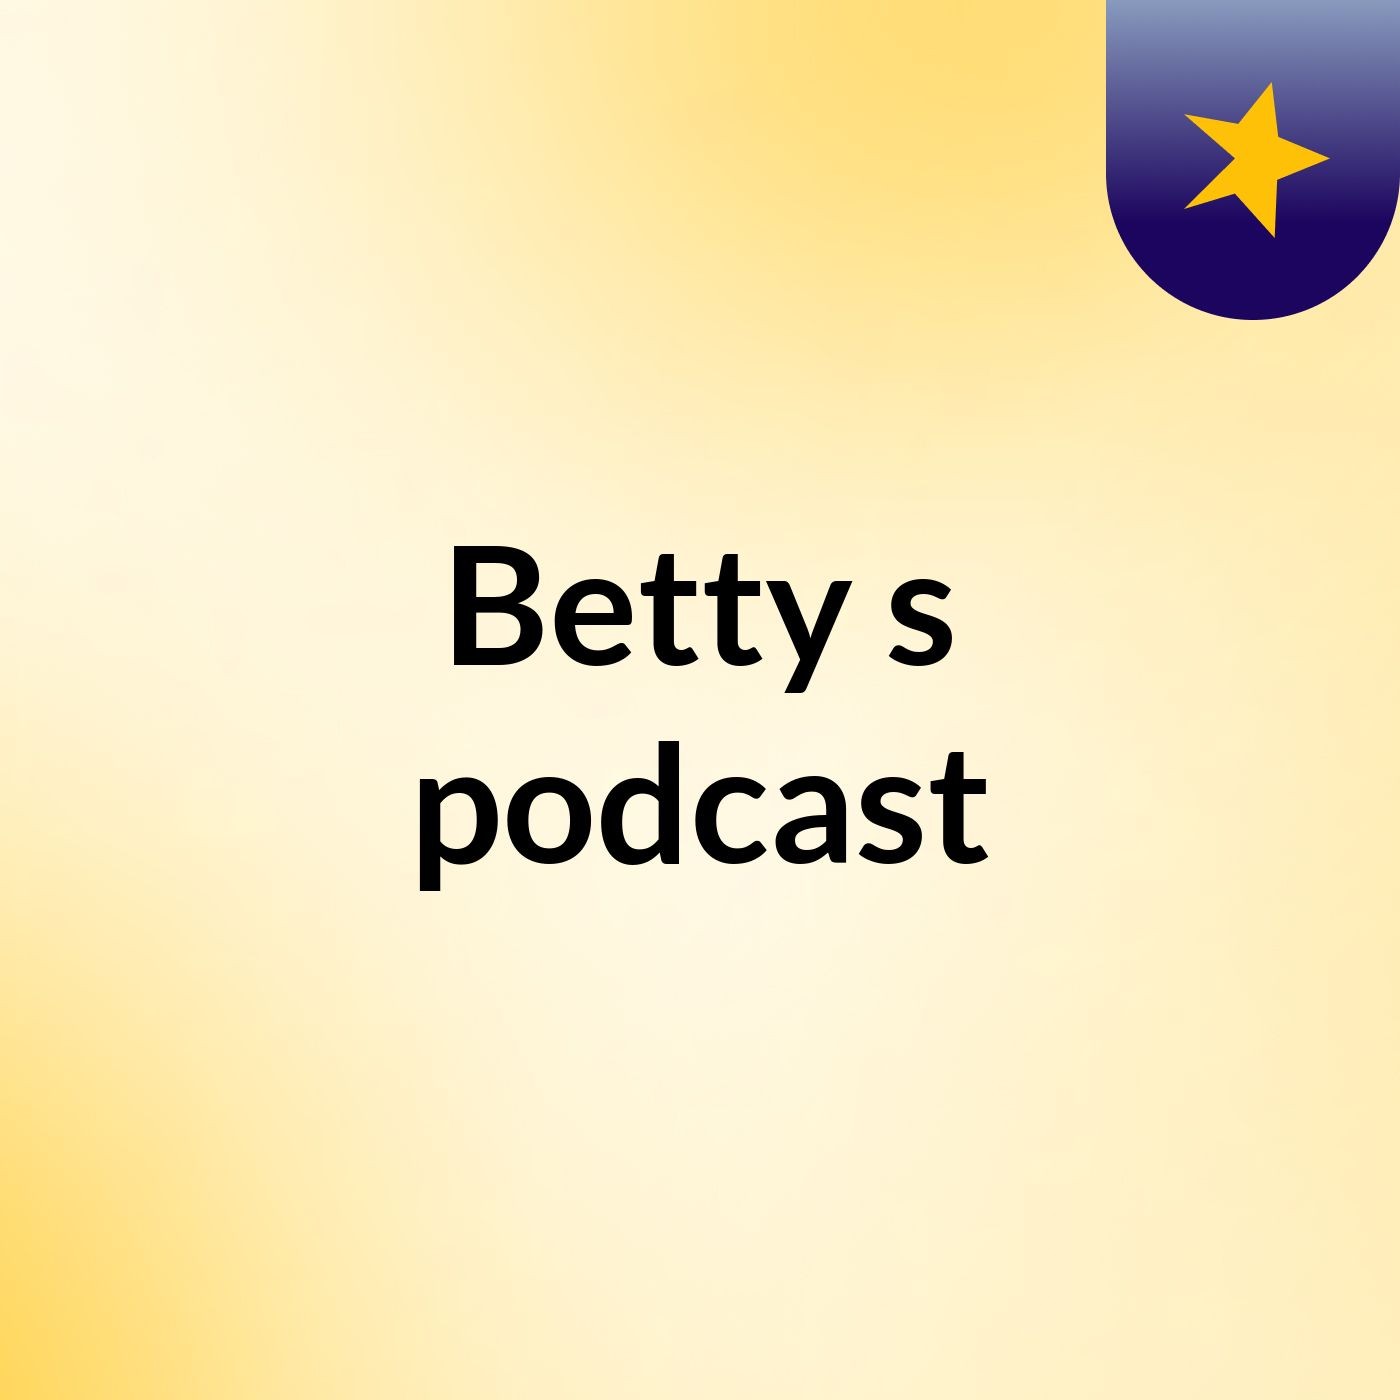 Betty's podcast